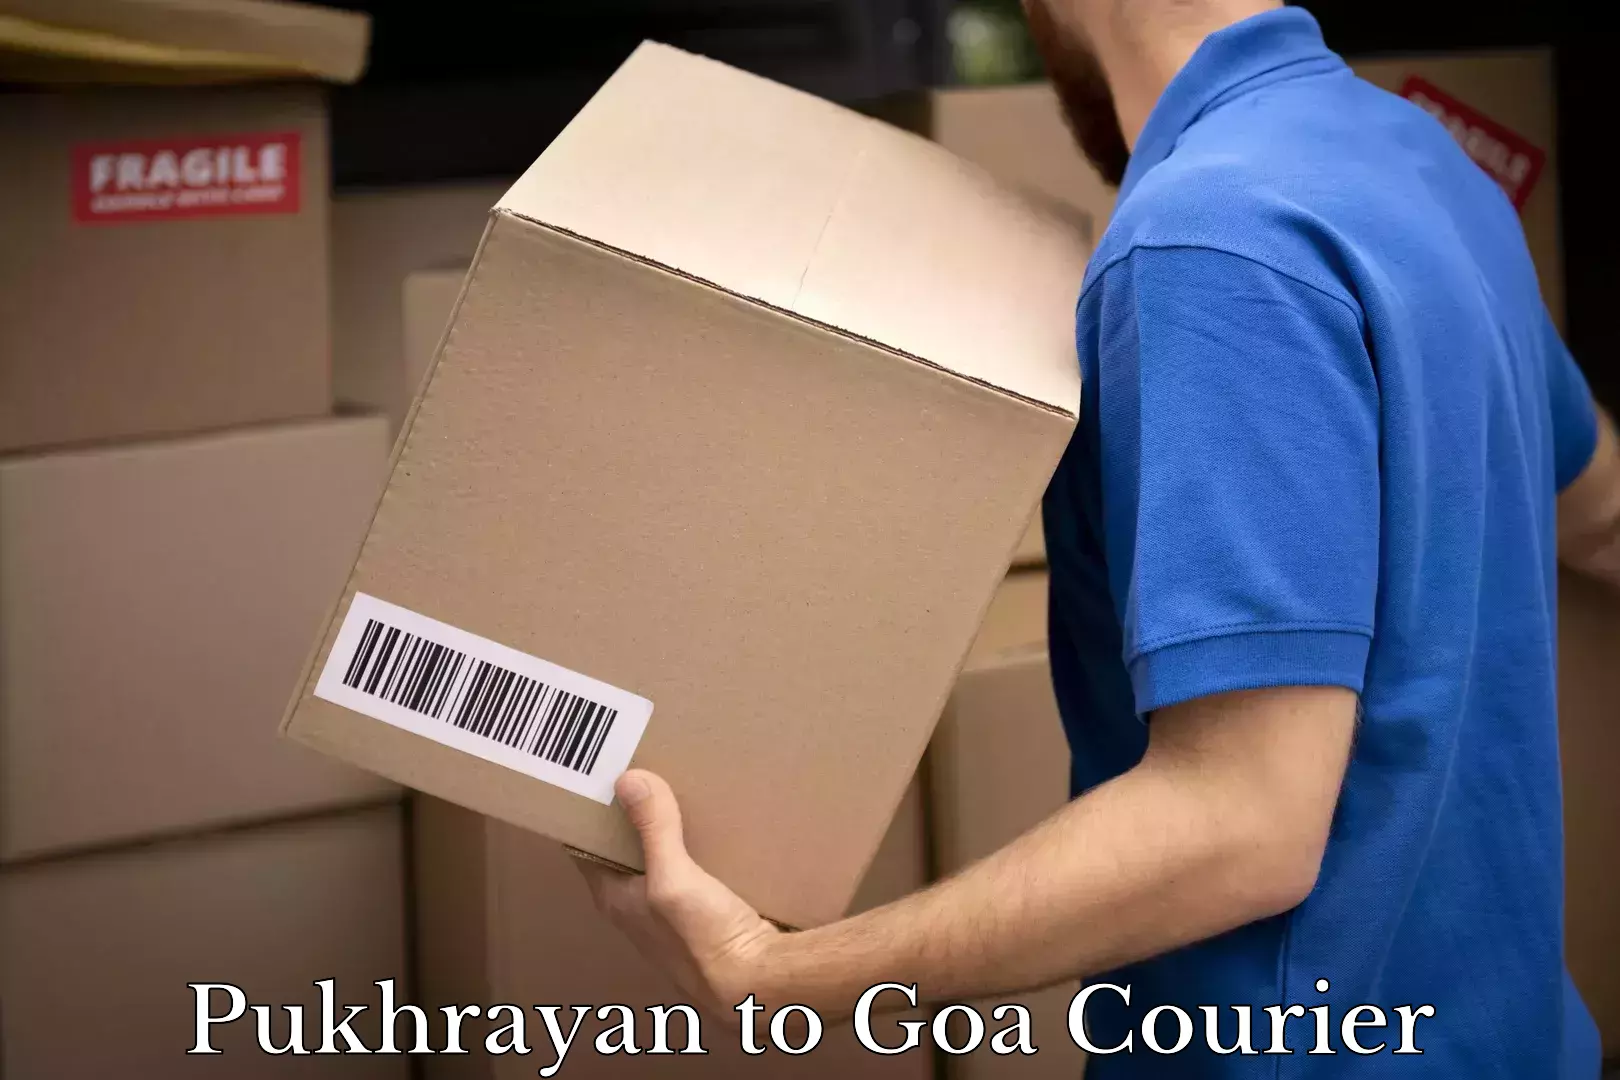 Courier service partnerships Pukhrayan to Goa